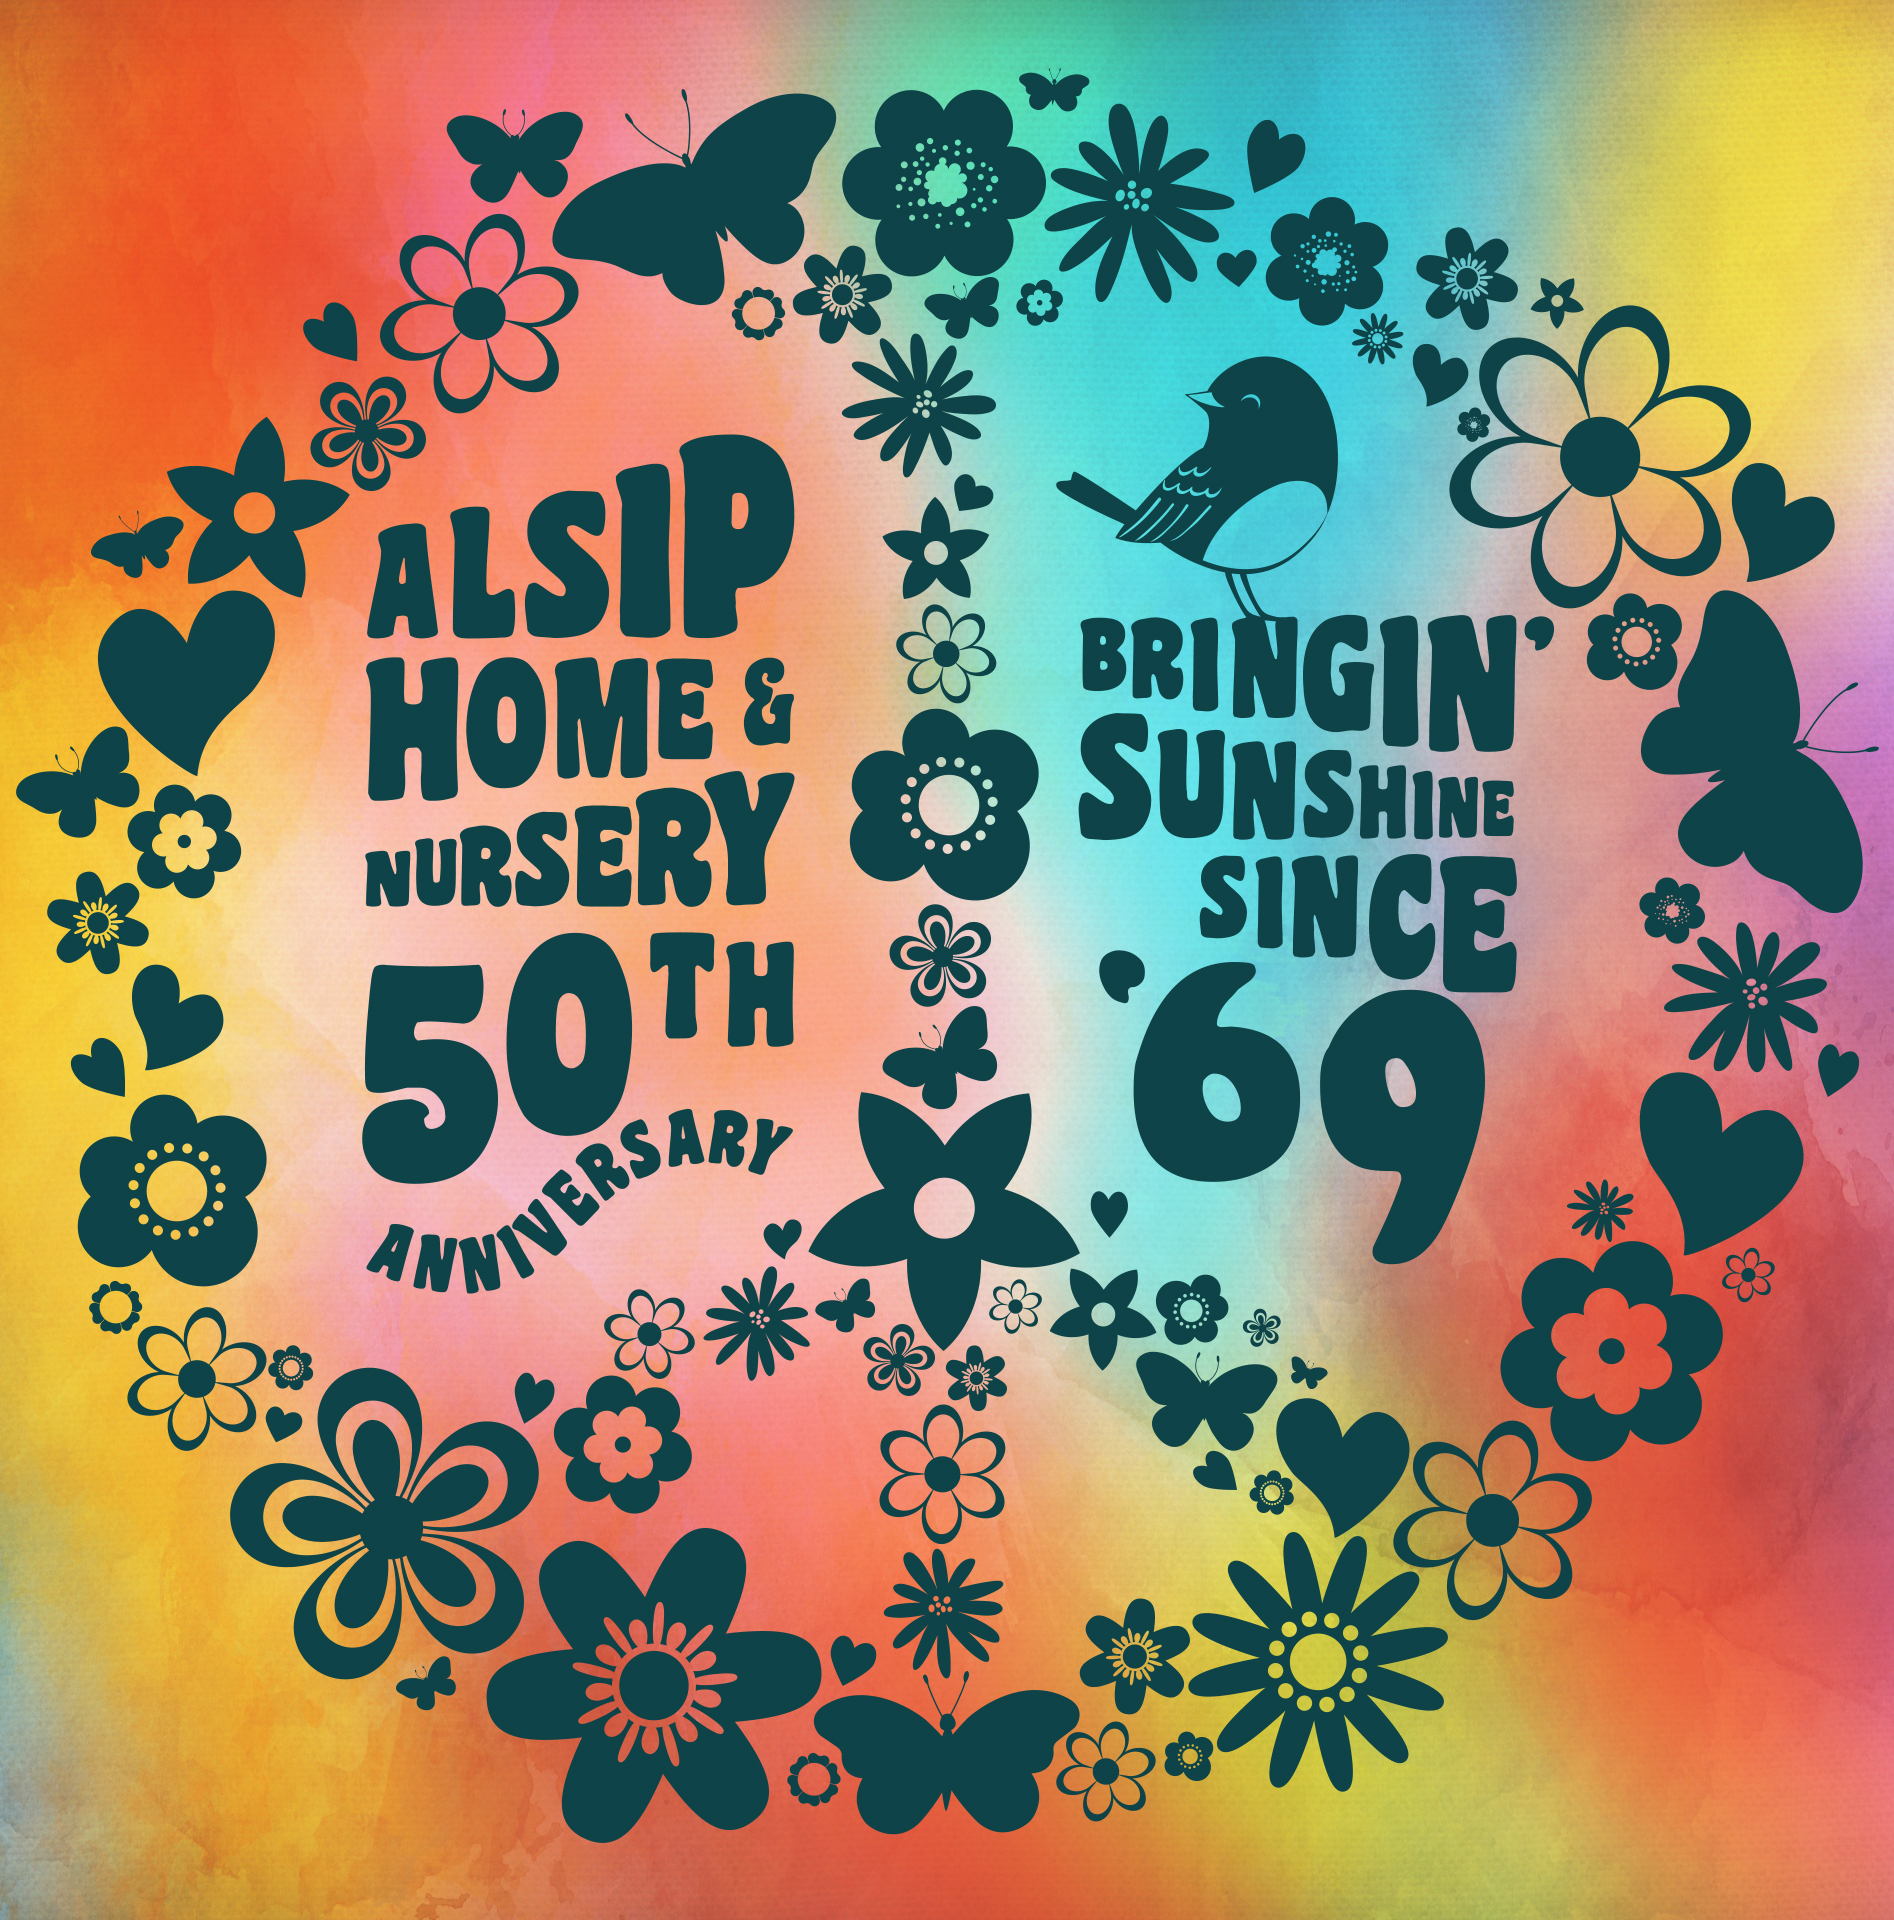 Alsip Home & Nursery 50th Anniversary Celebration